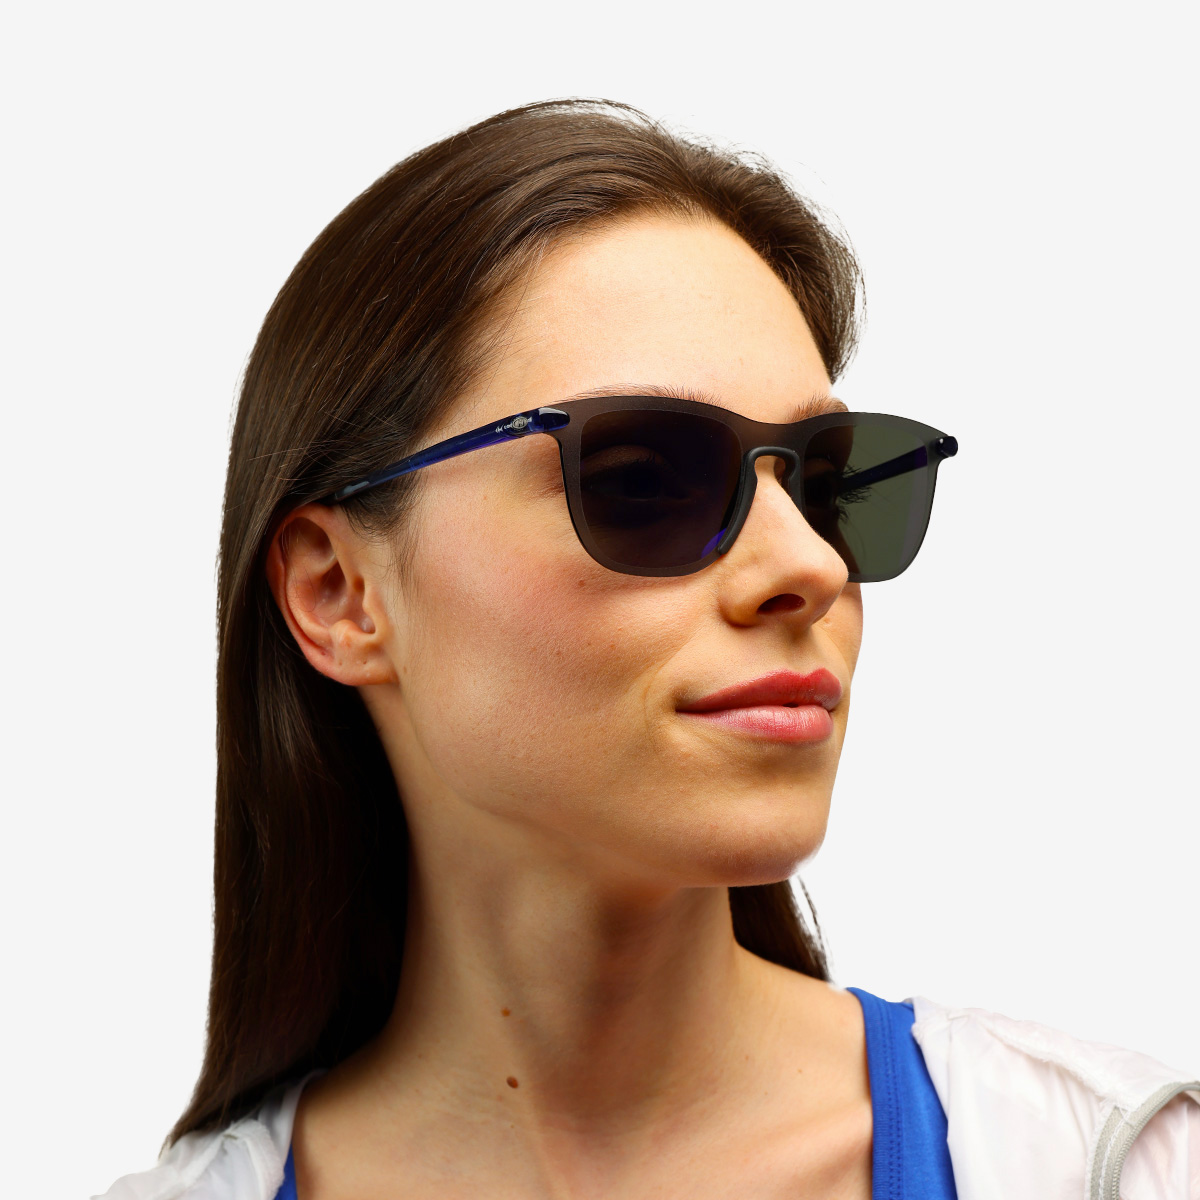 Buy Legend Eyewear Sports Sunglasses for Men Women Youth Cricket Baseball  Fishing Cycling Running Golf Motorcycle Tac Glasses UV400 (Blue Black) at  Amazon.in